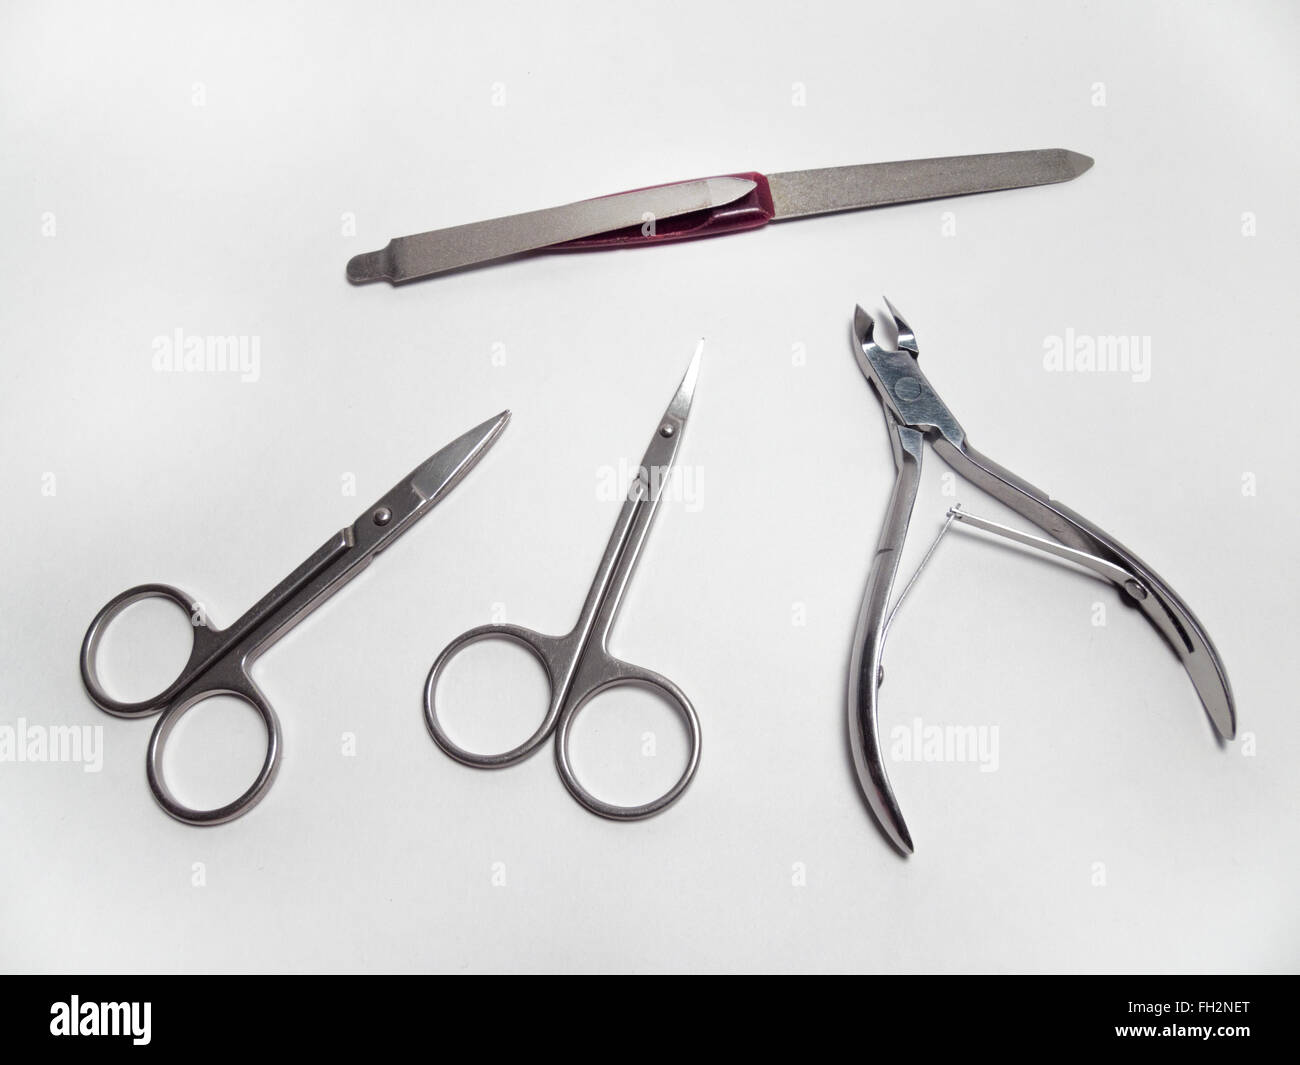 https://c8.alamy.com/comp/FH2NET/manicure-set-nail-nipper-straight-scissors-cuticle-scissors-nail-scissors-FH2NET.jpg